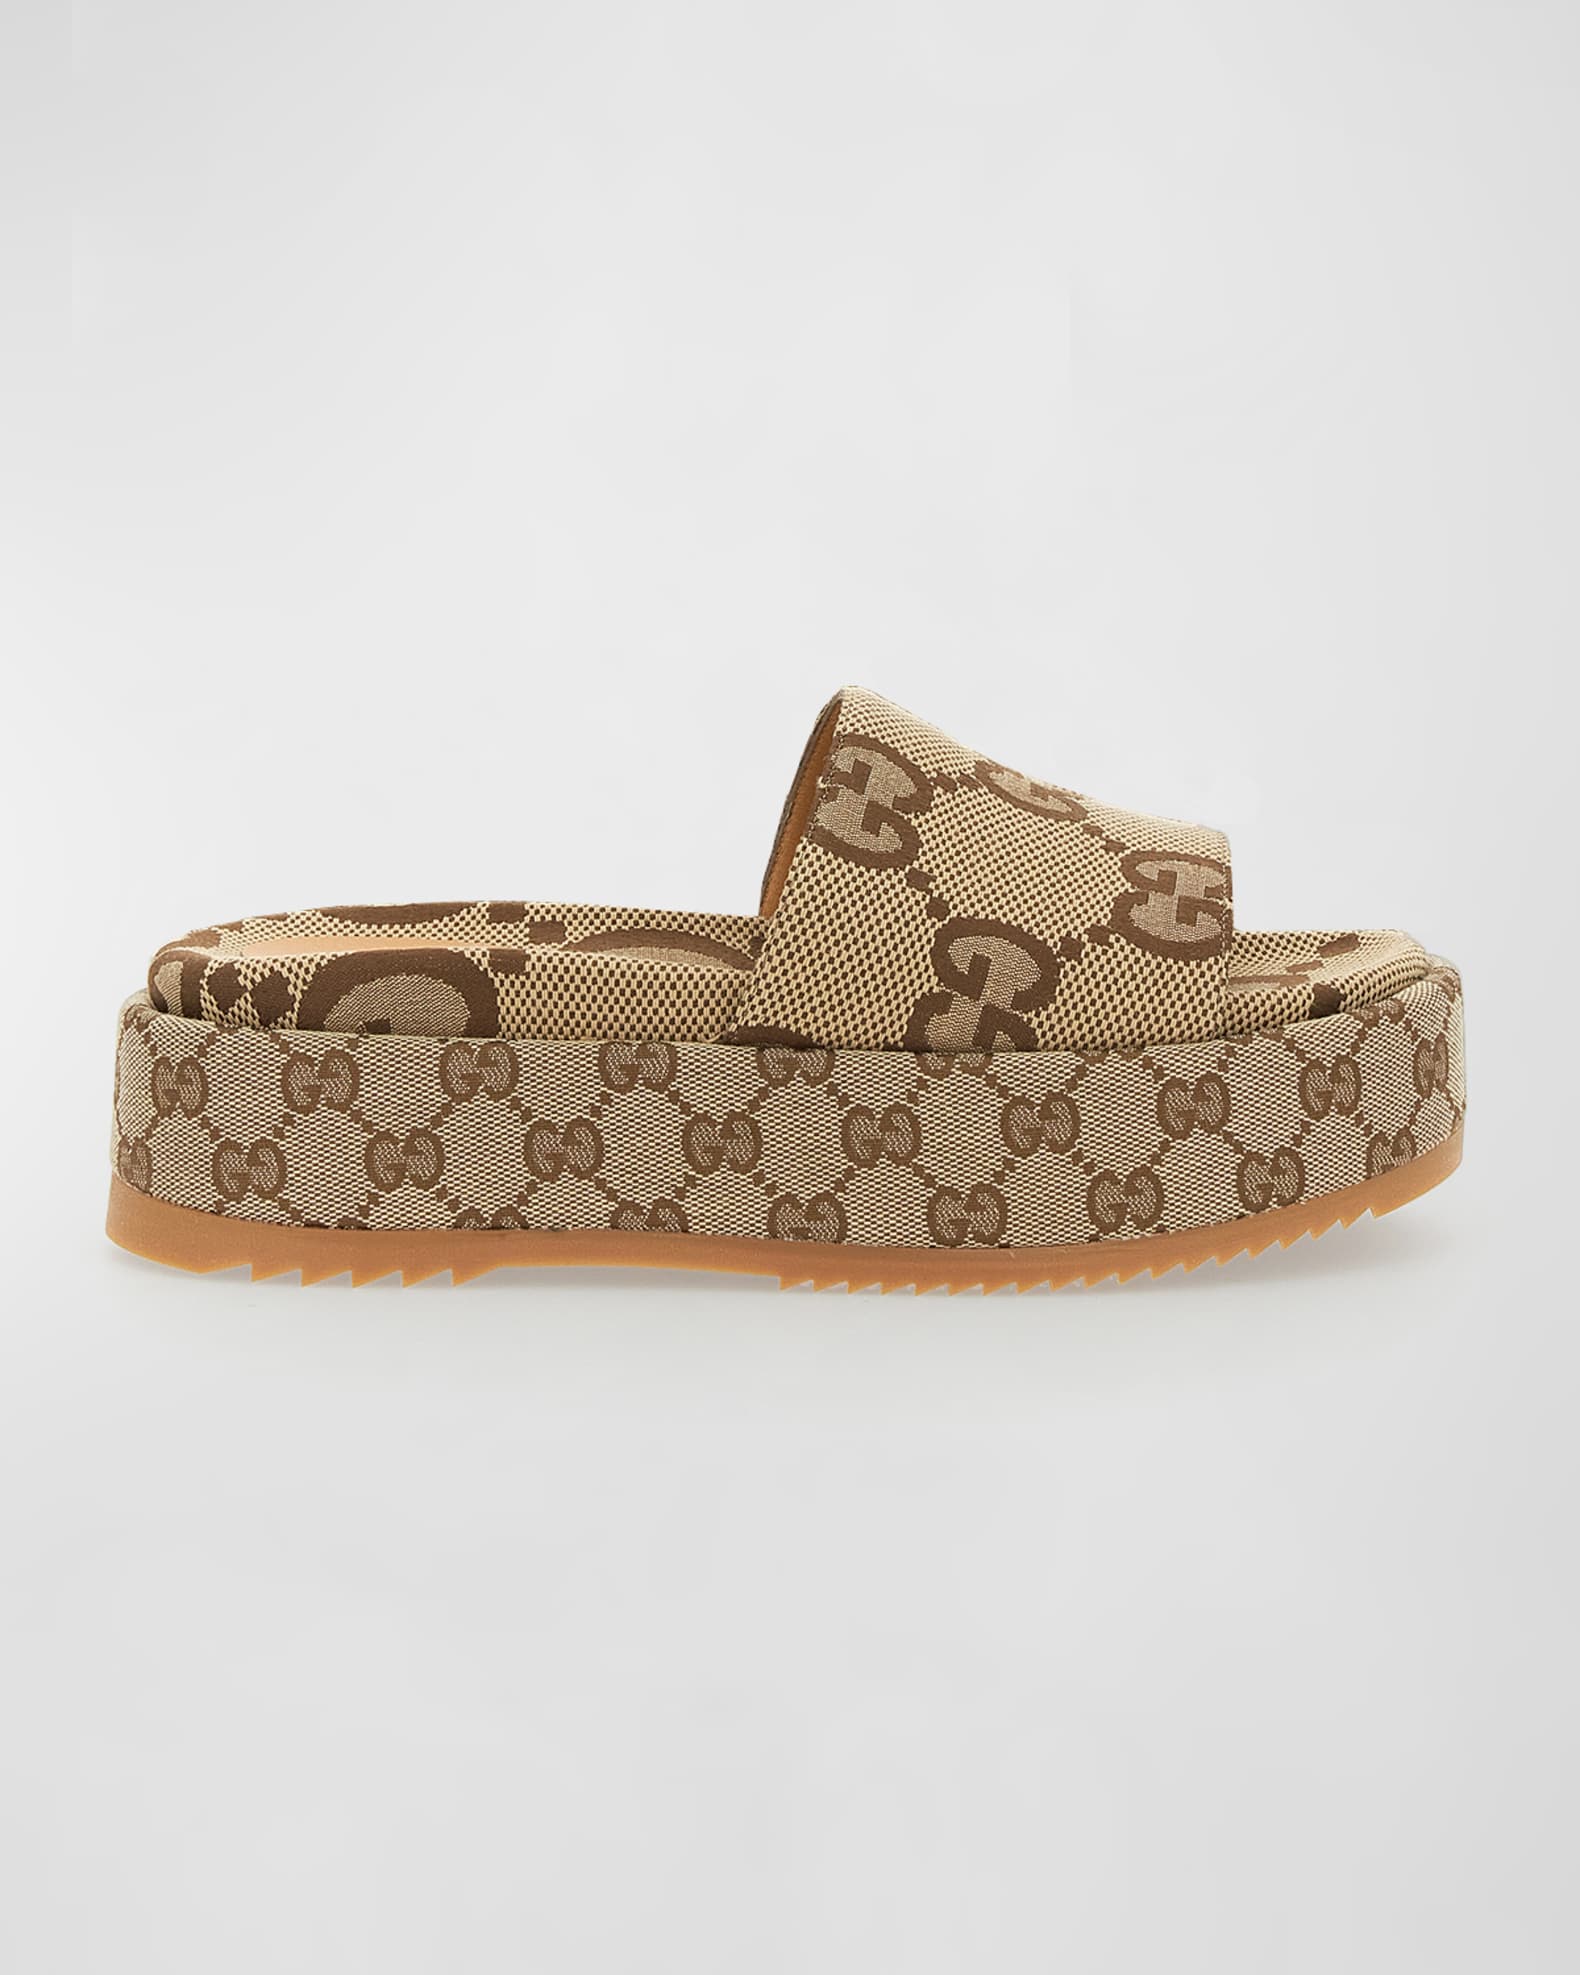 GG Supreme Canvas Sandals in Brown - Gucci